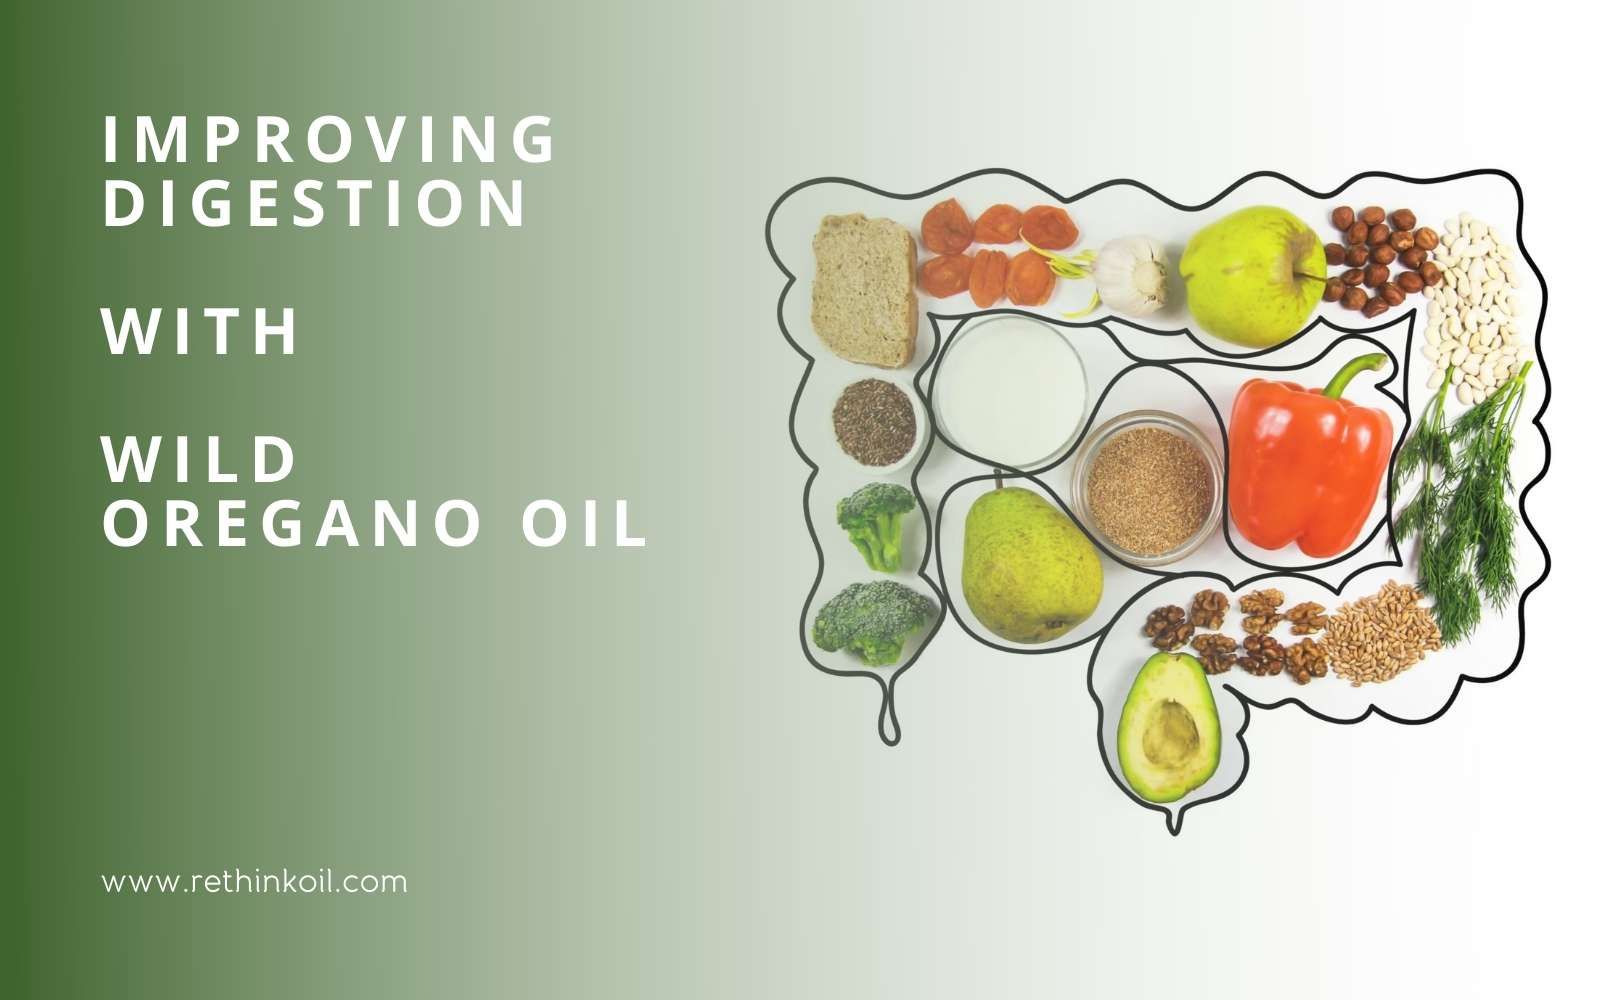 ReThinkOil Blog Improving Digestion with Wild Oregano Oil